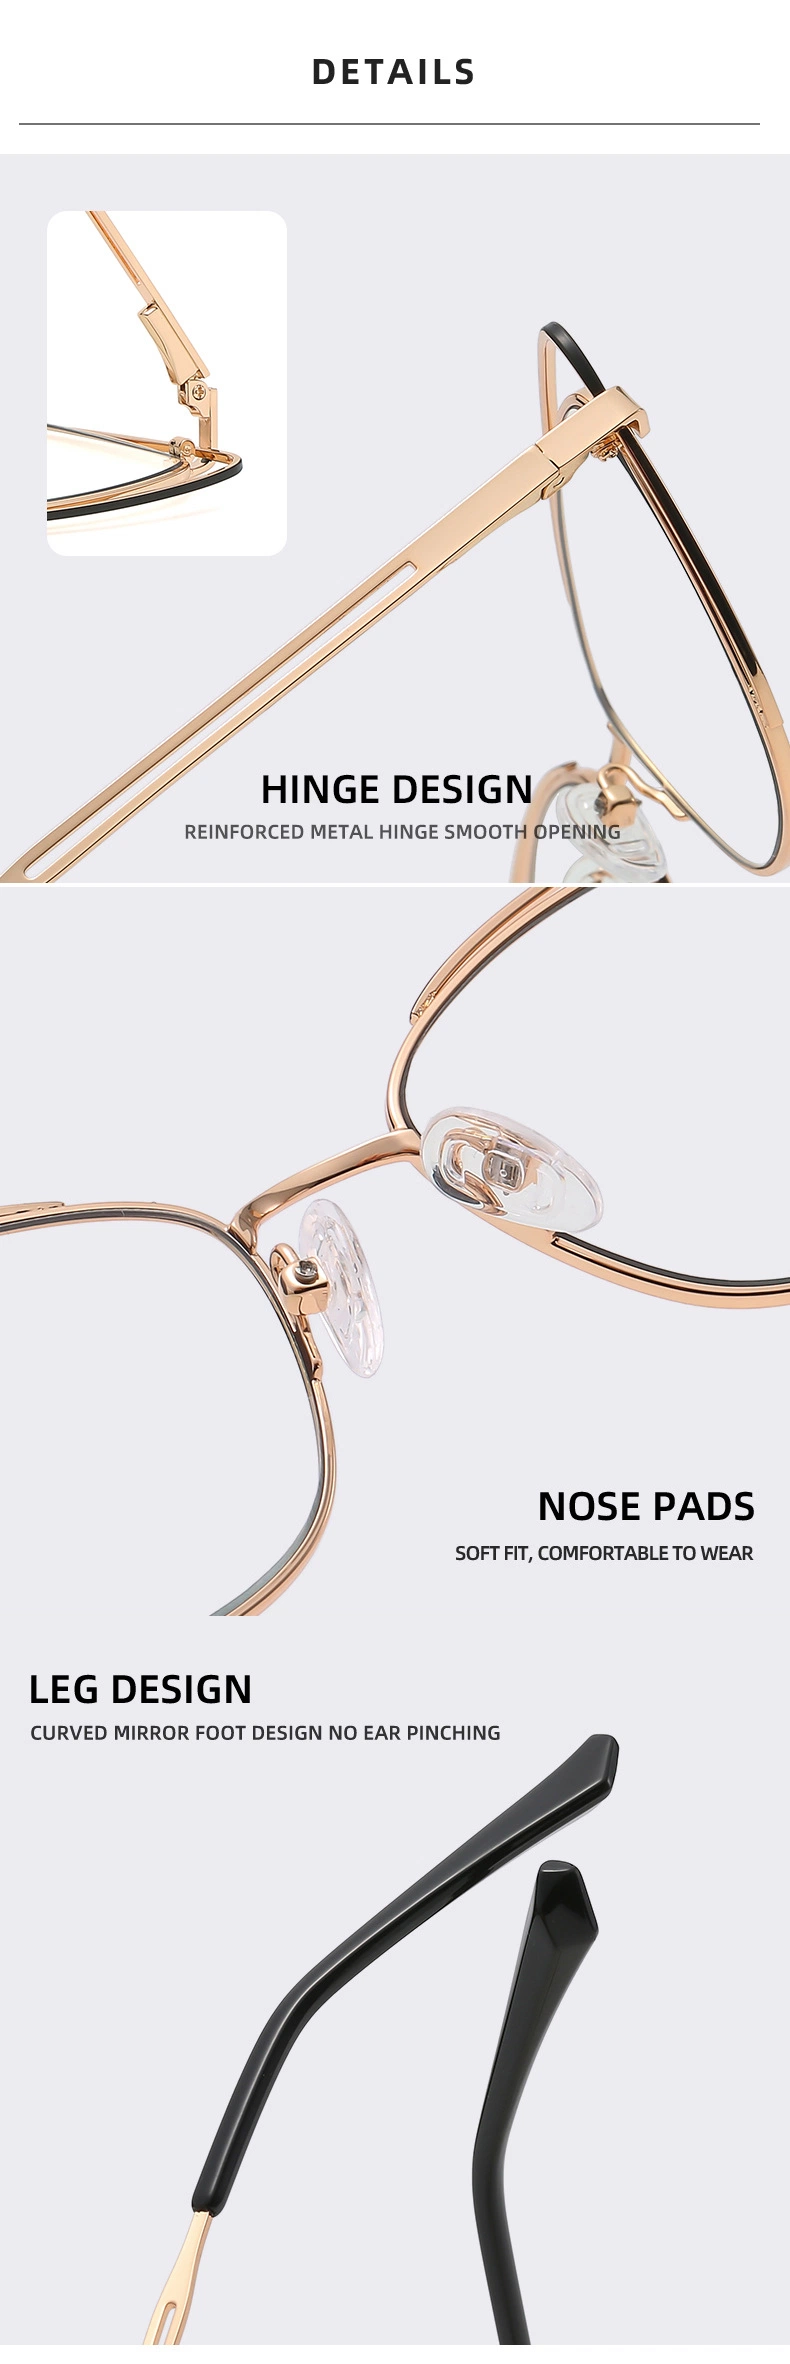 New Arrive Ready to Ship Hot Selling Flat Lens Myopia Lens Cat&prime;s Eye Women Fashion Anti Blue Light Blocking Glasses Wholesale